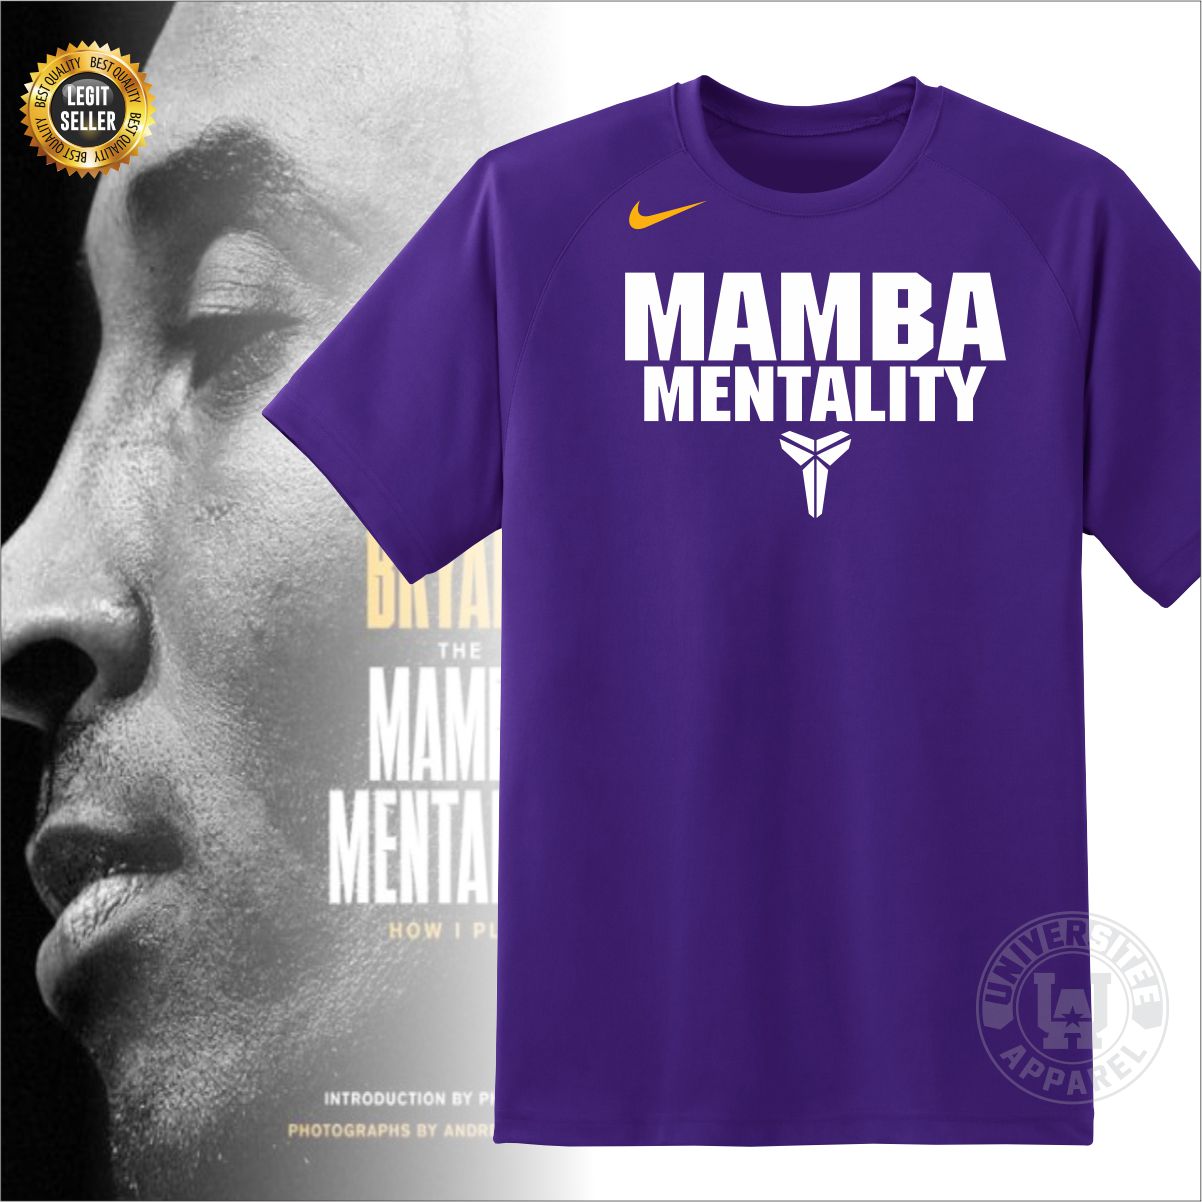 mamba mentality gear